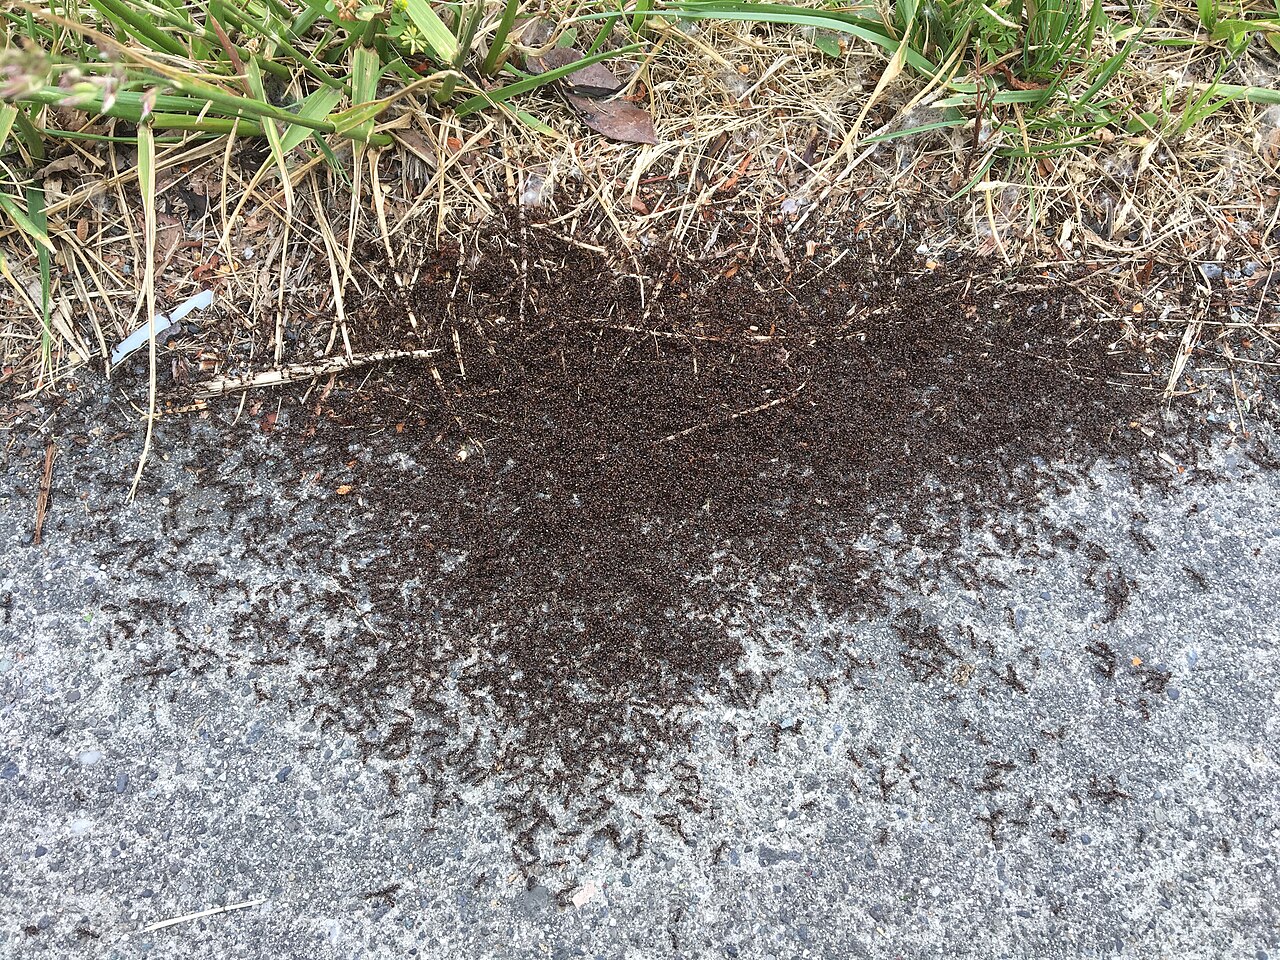 Battle between pavement ant colonies on sidewalk, May 2019, Mount Vernon, Washington, US